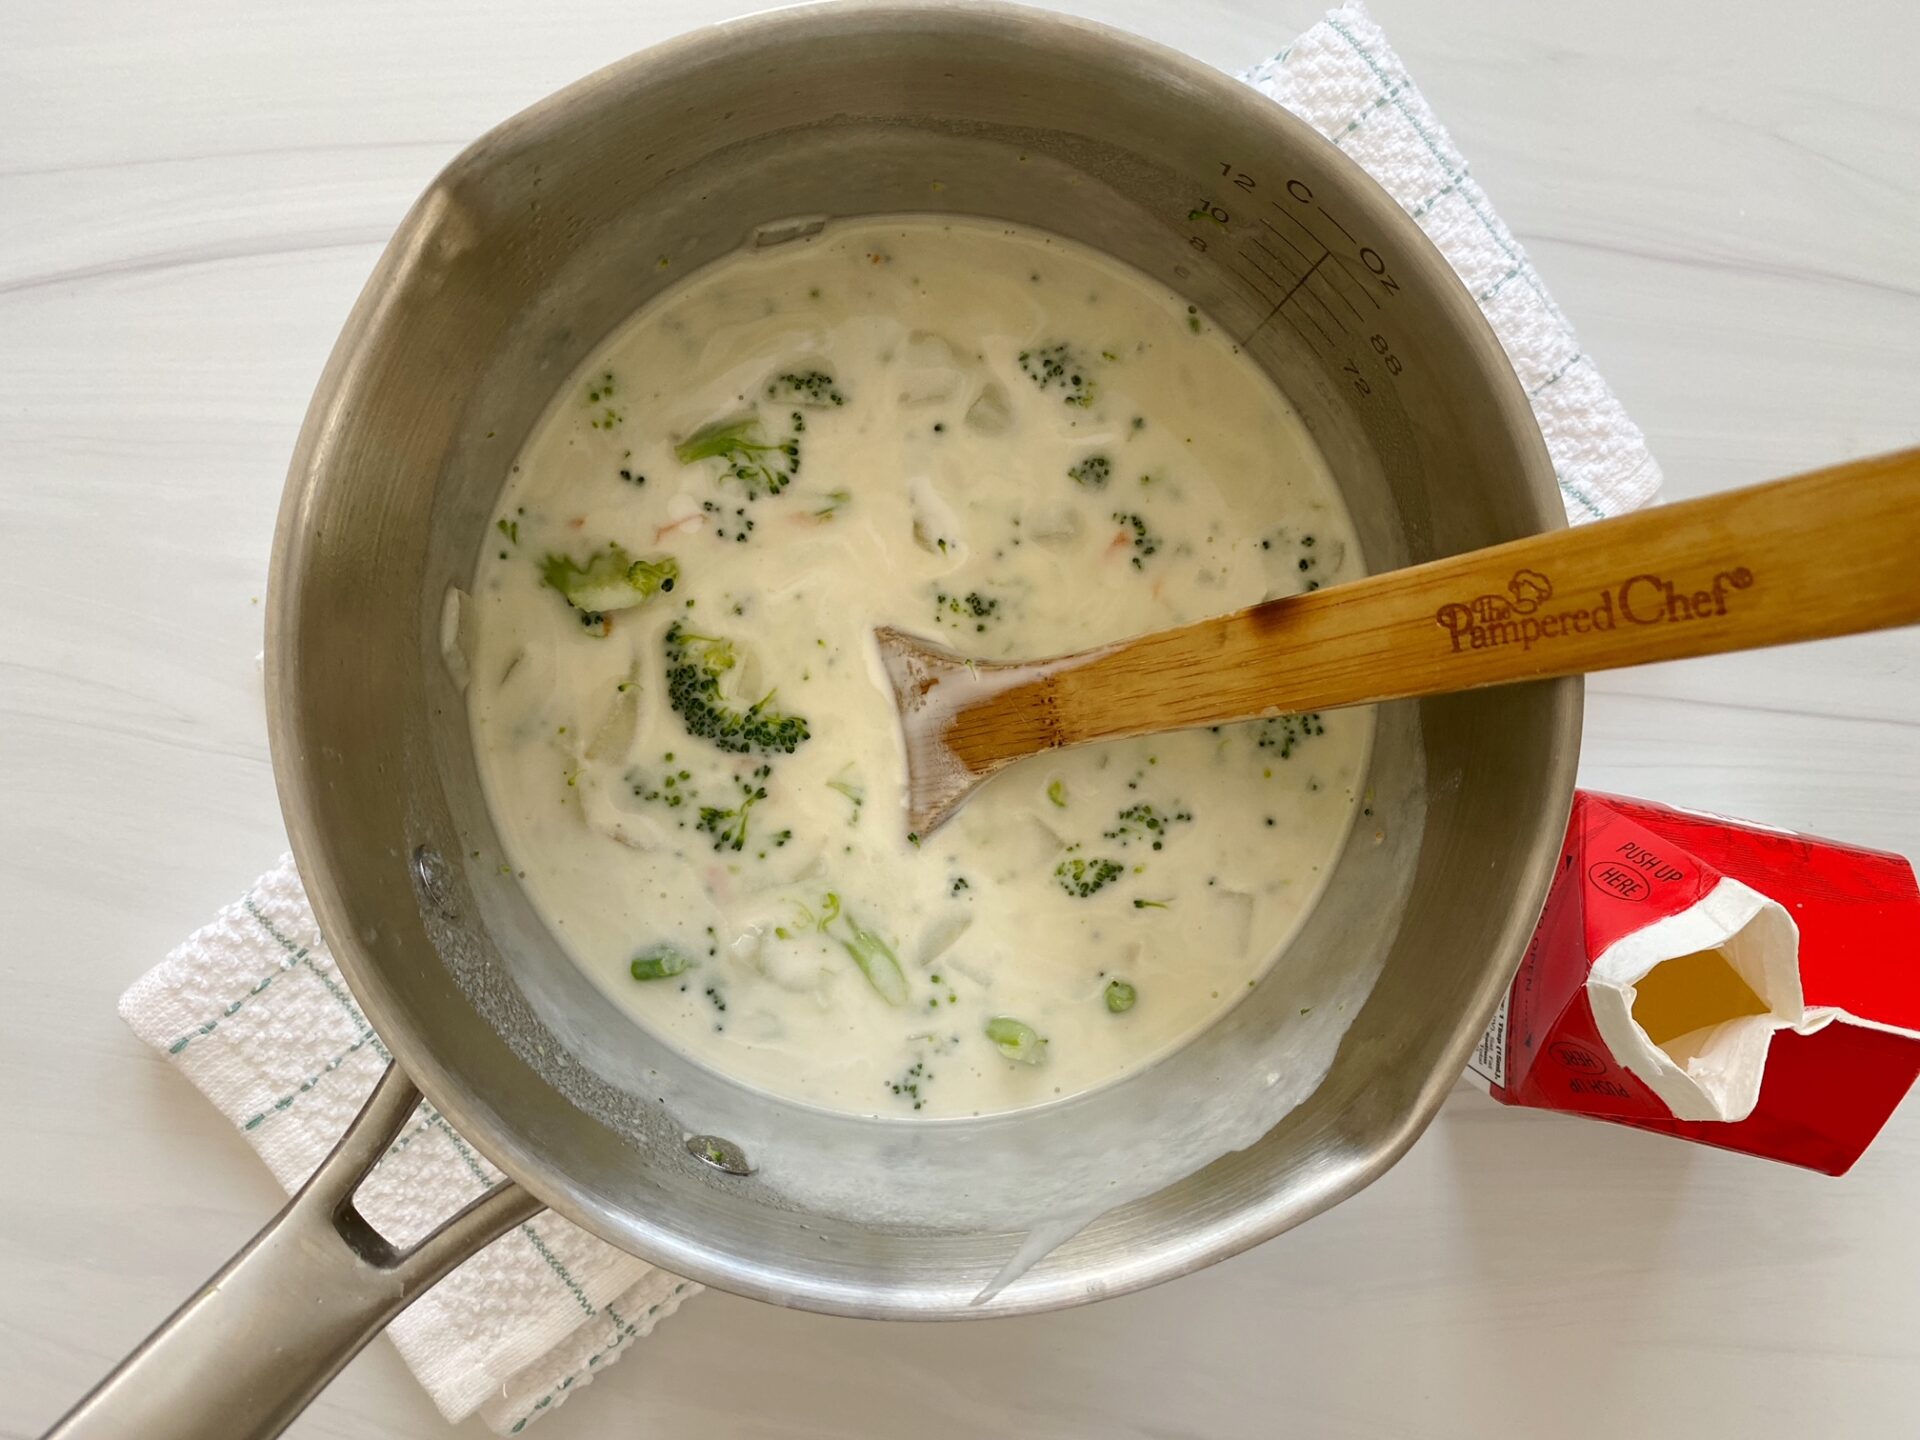 Mixing cream into broccoli cheese soup.